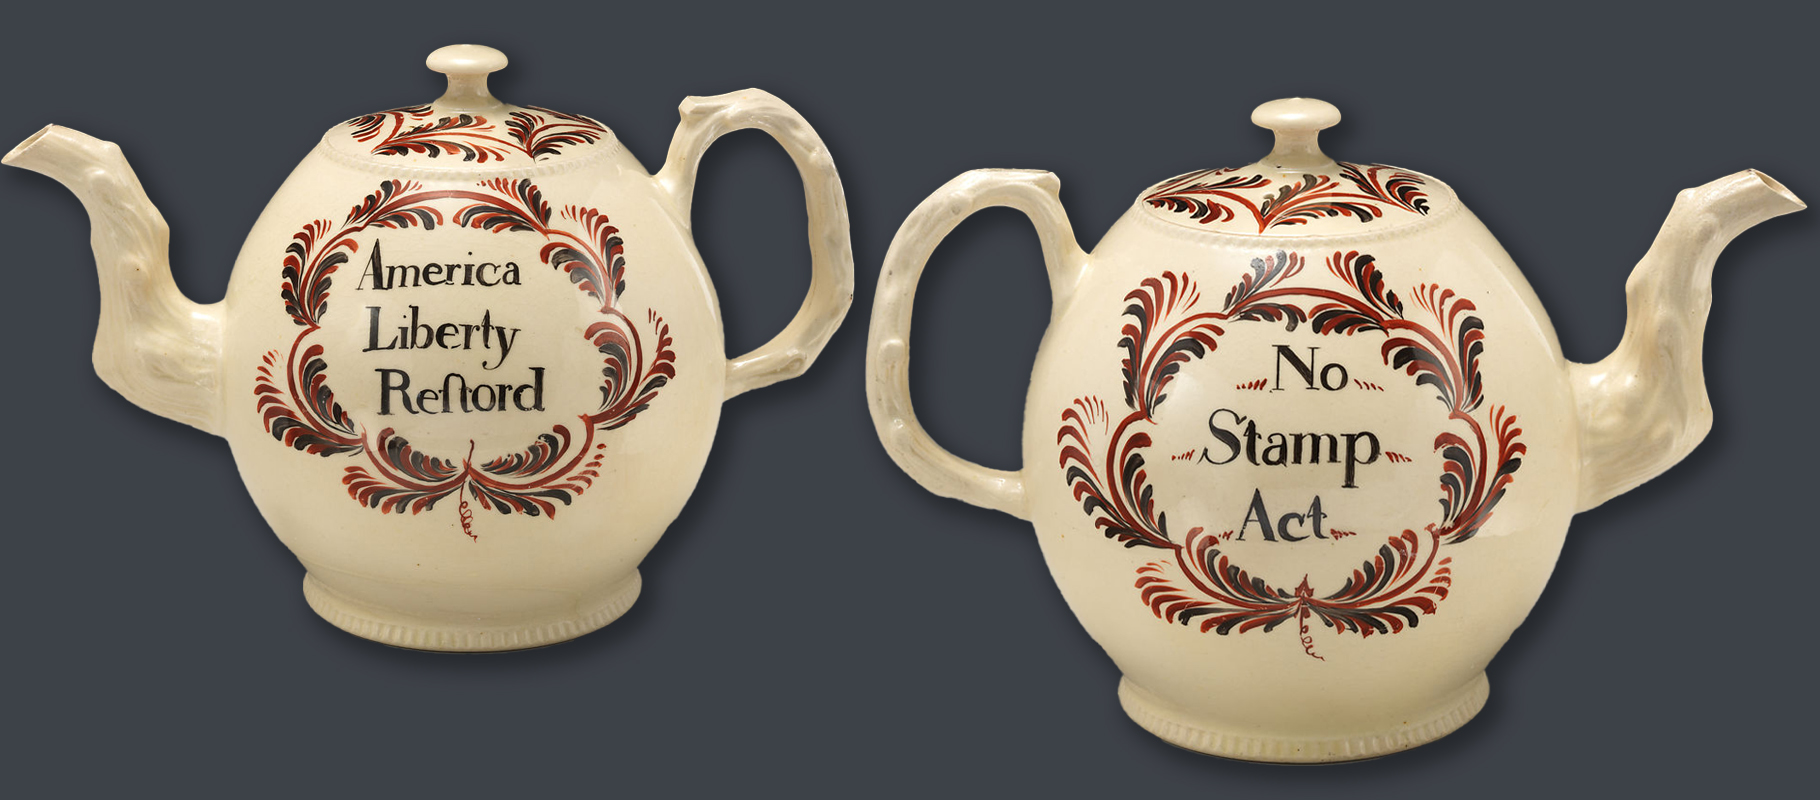 American stamp act teapot